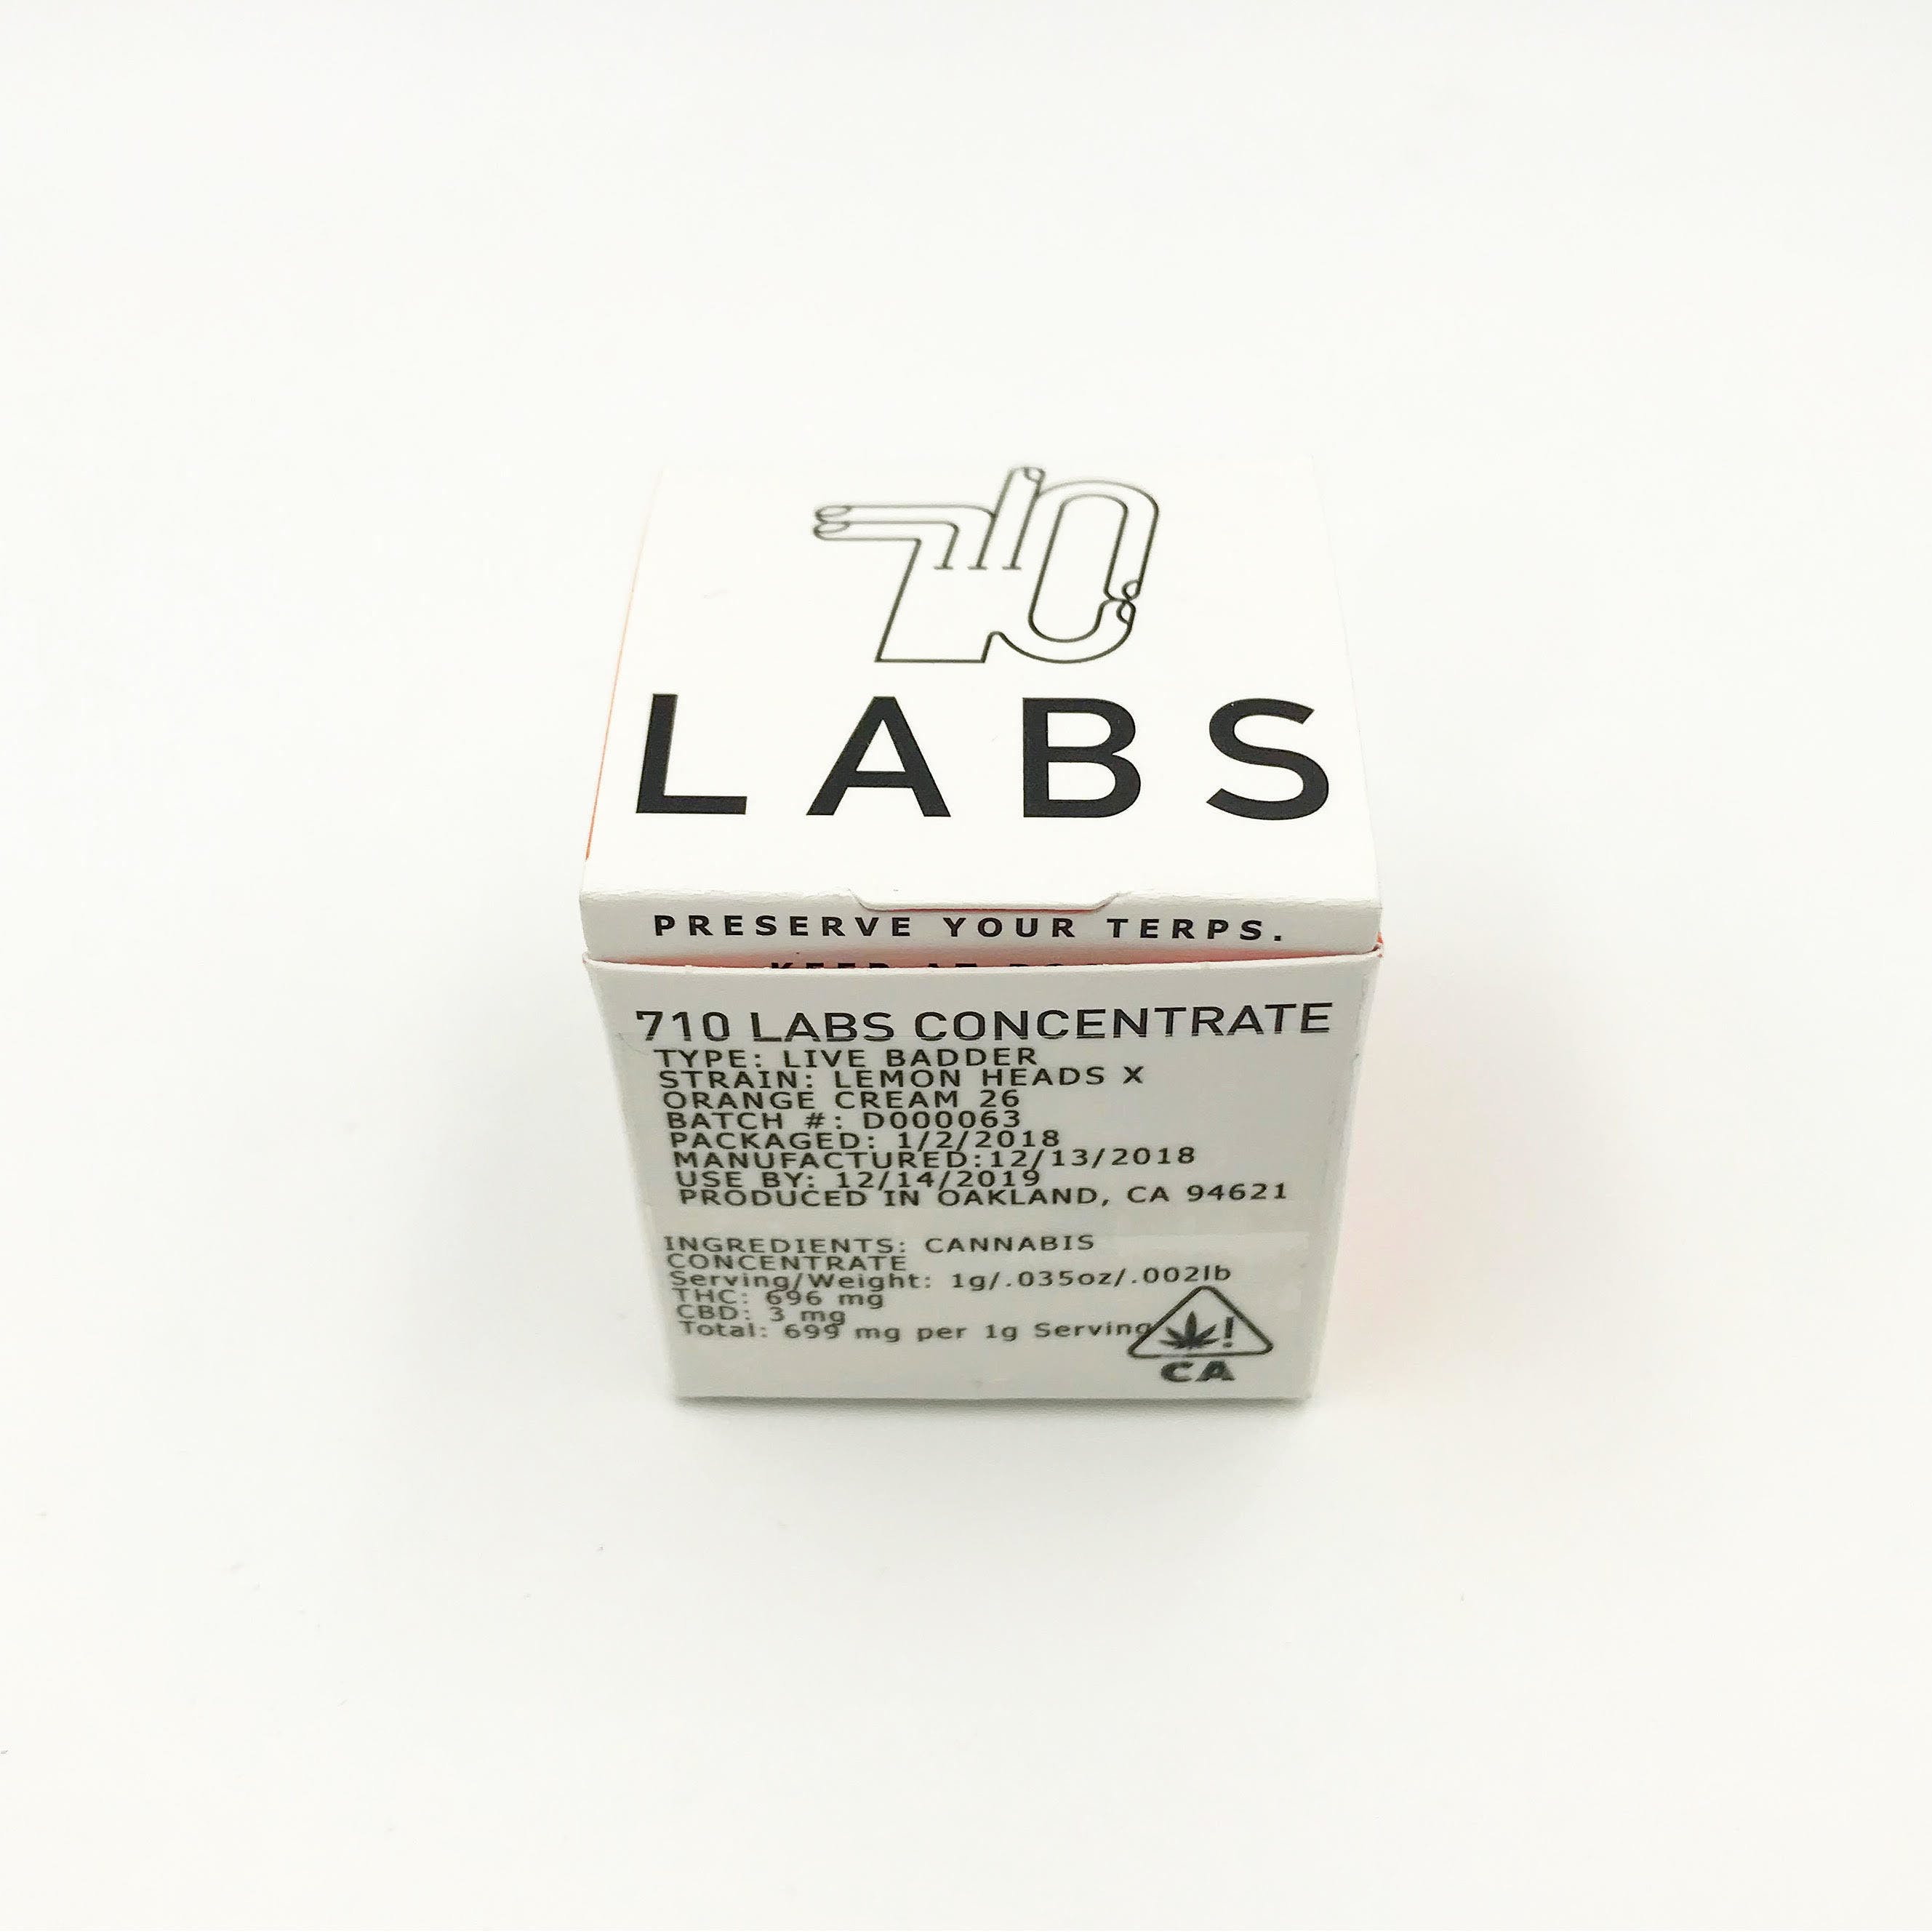 710 Labs - Lemon Heads x Orange Cream 26 badder